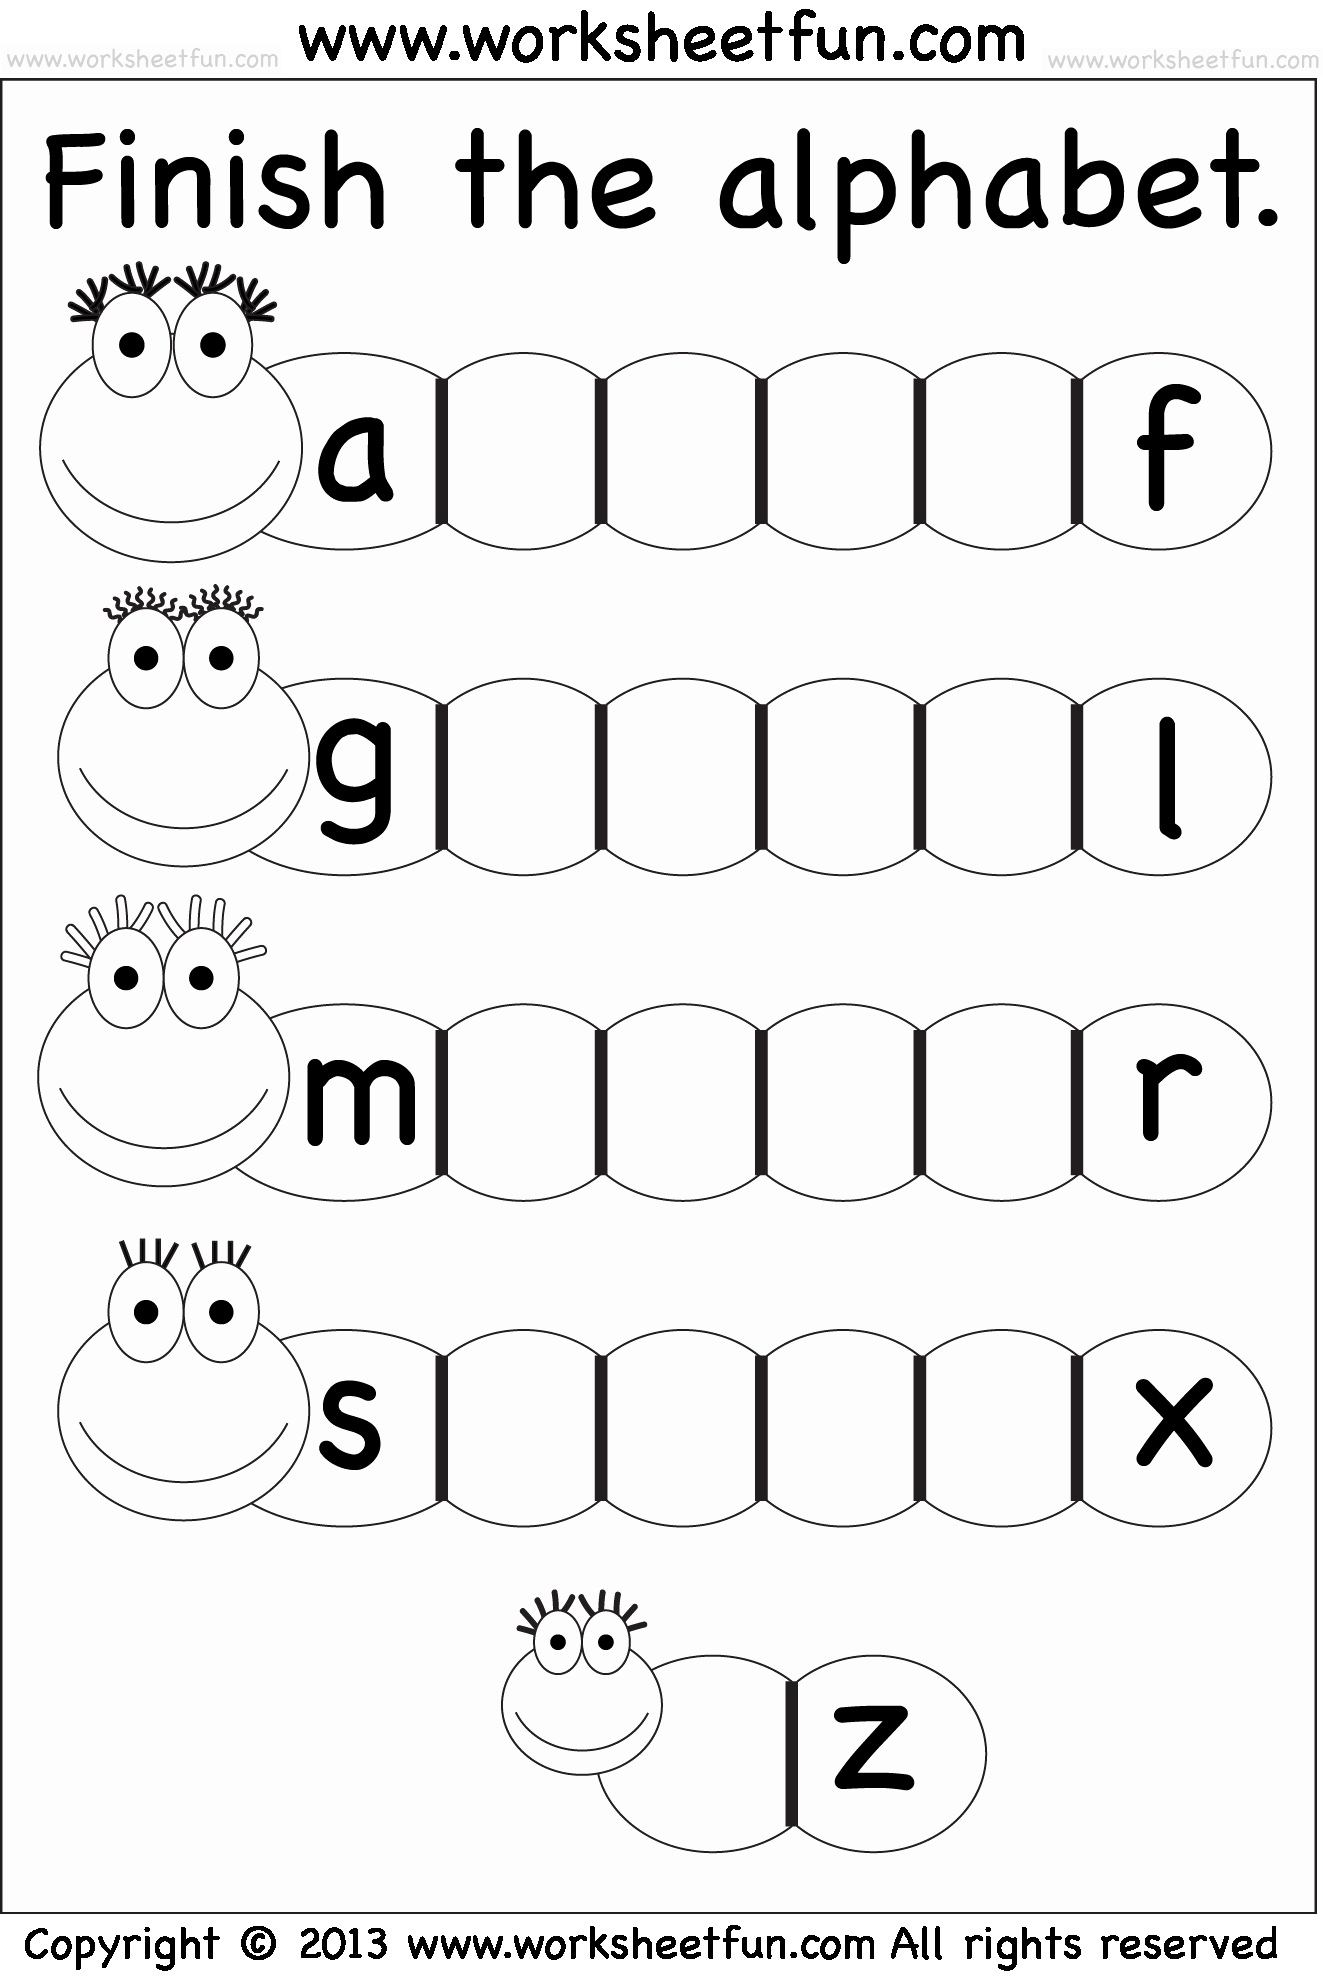 Kindergarten Lowercase Letters Worksheets New Missing Lowercase Letters – Missing Small Letters